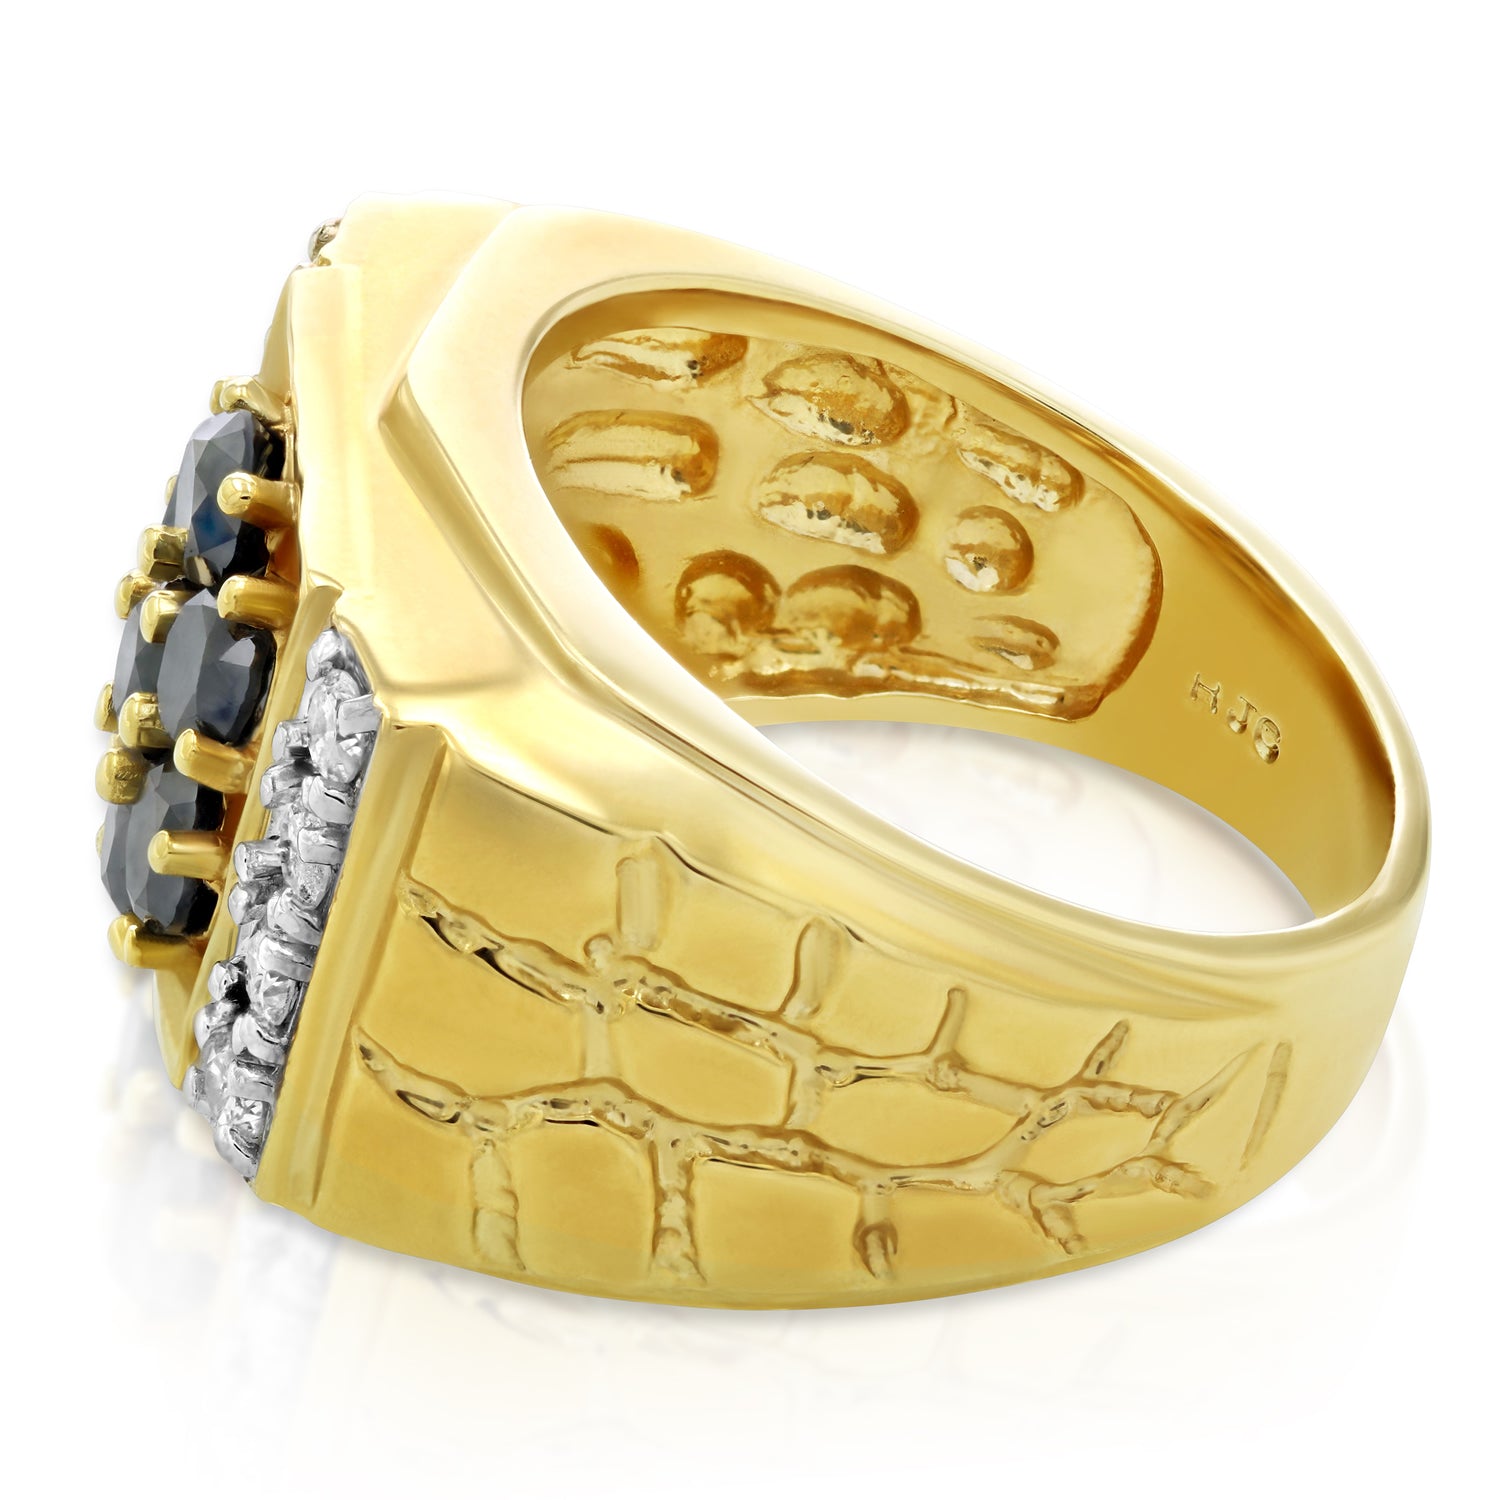 2.50 cttw Men's Diamond Ring 10K Yellow Gold Wedding Engagement Bridal Size 10